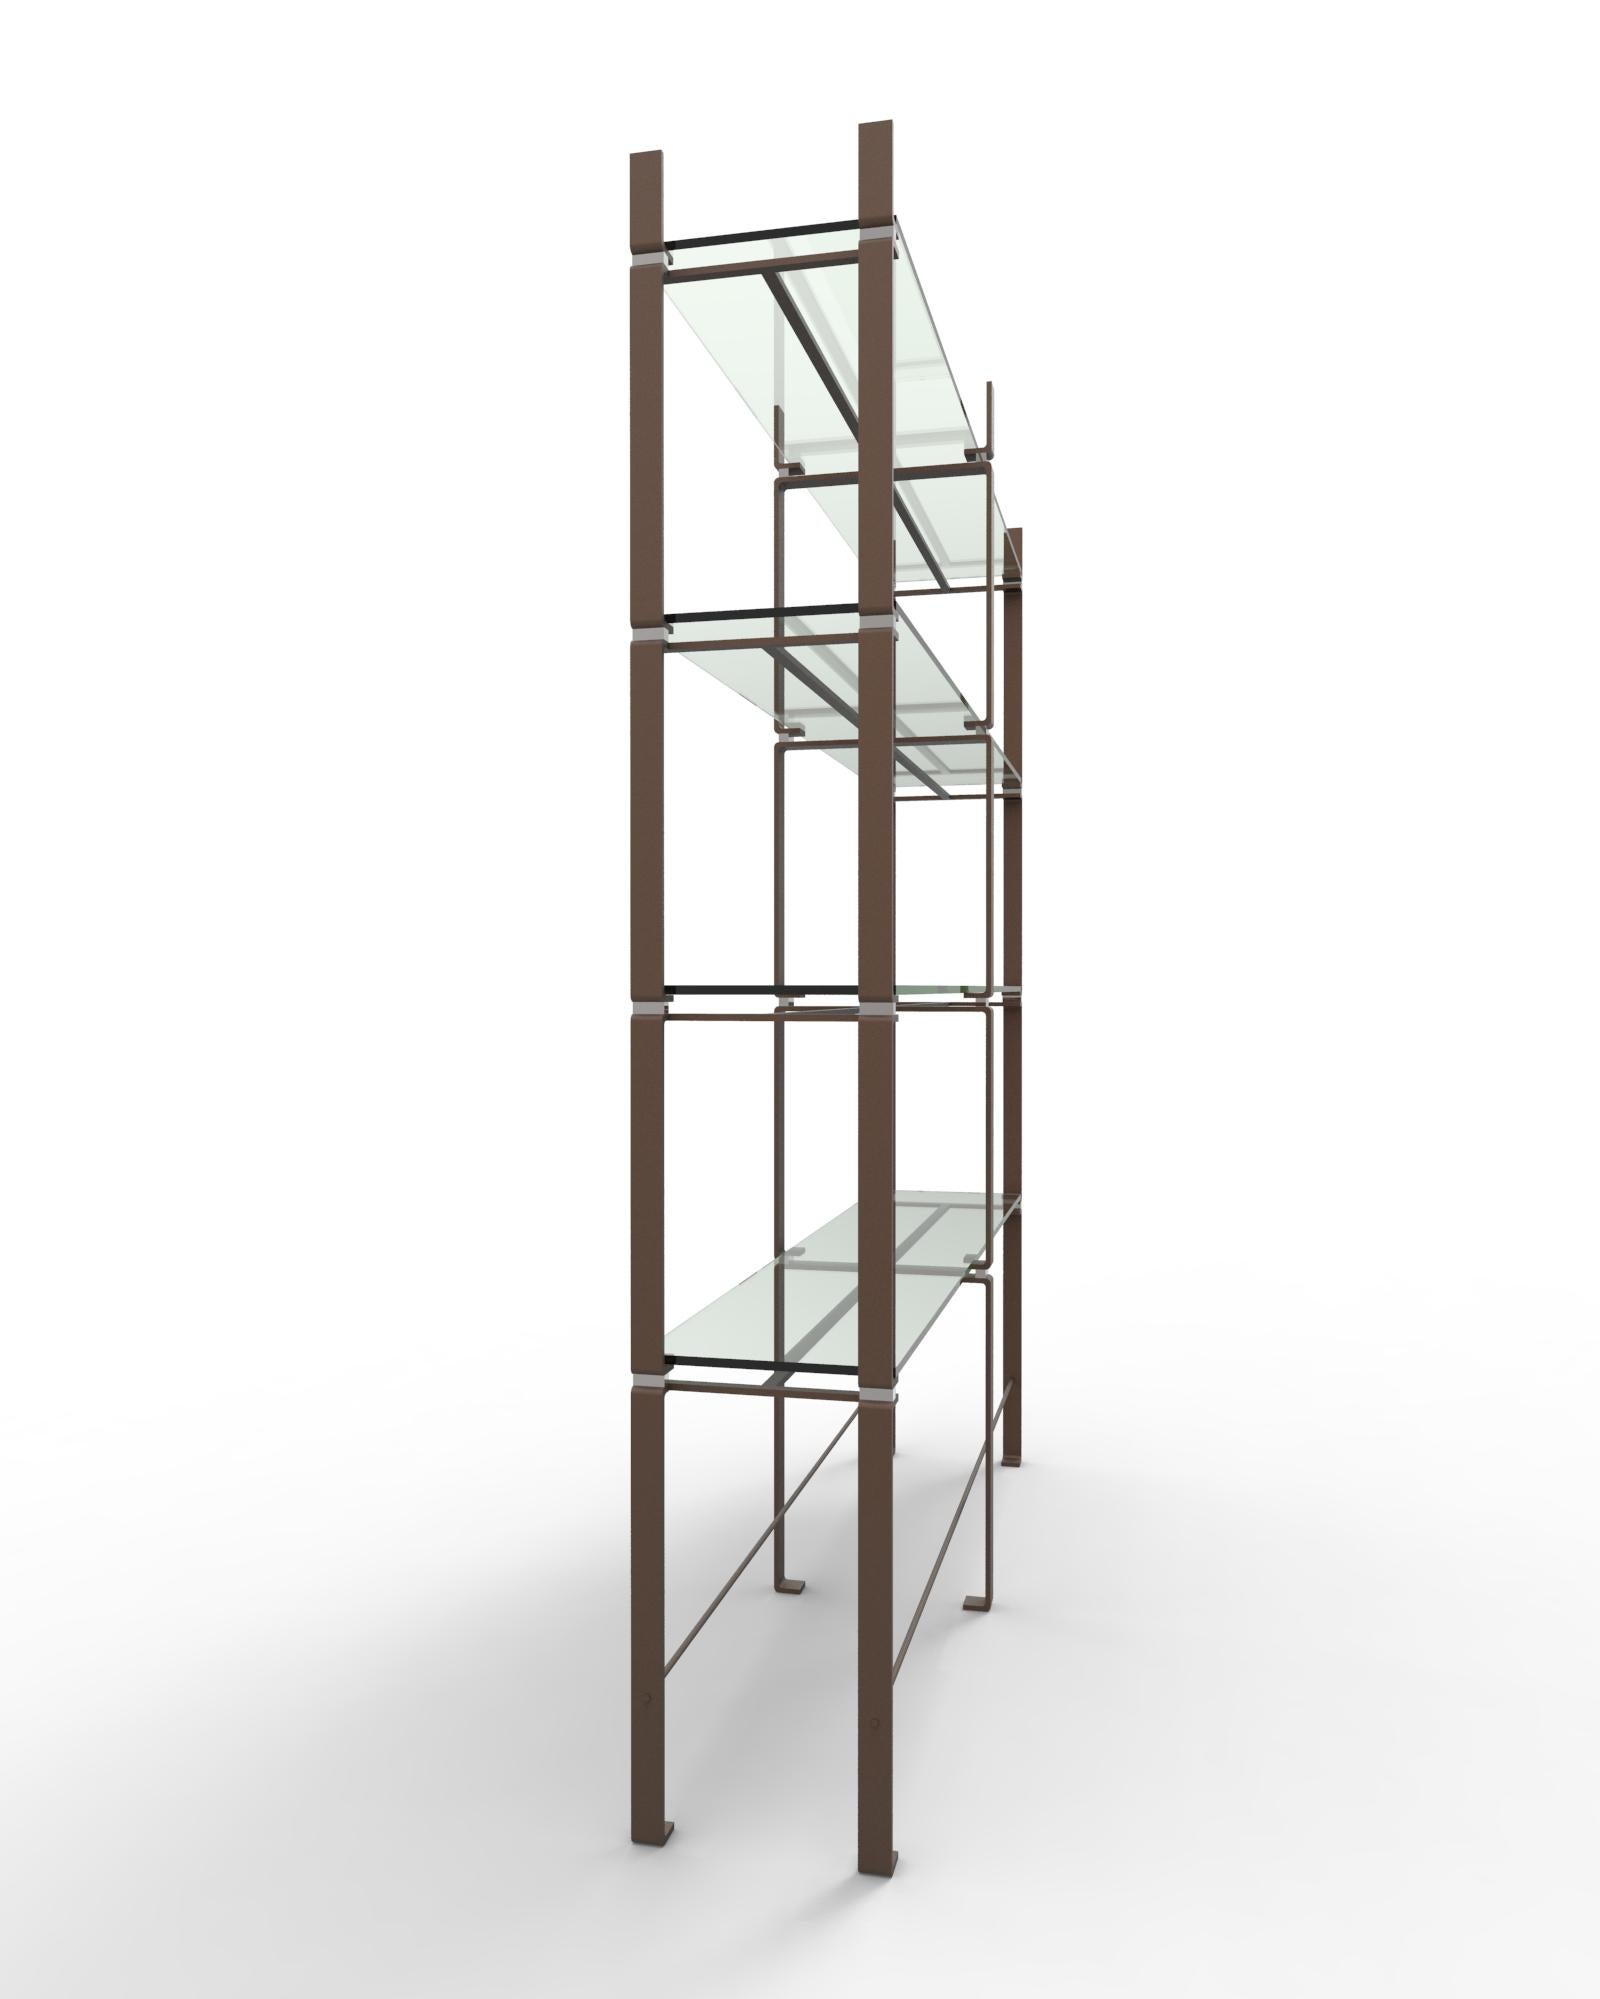 Other Double Etagere Shelves by Gentner Design